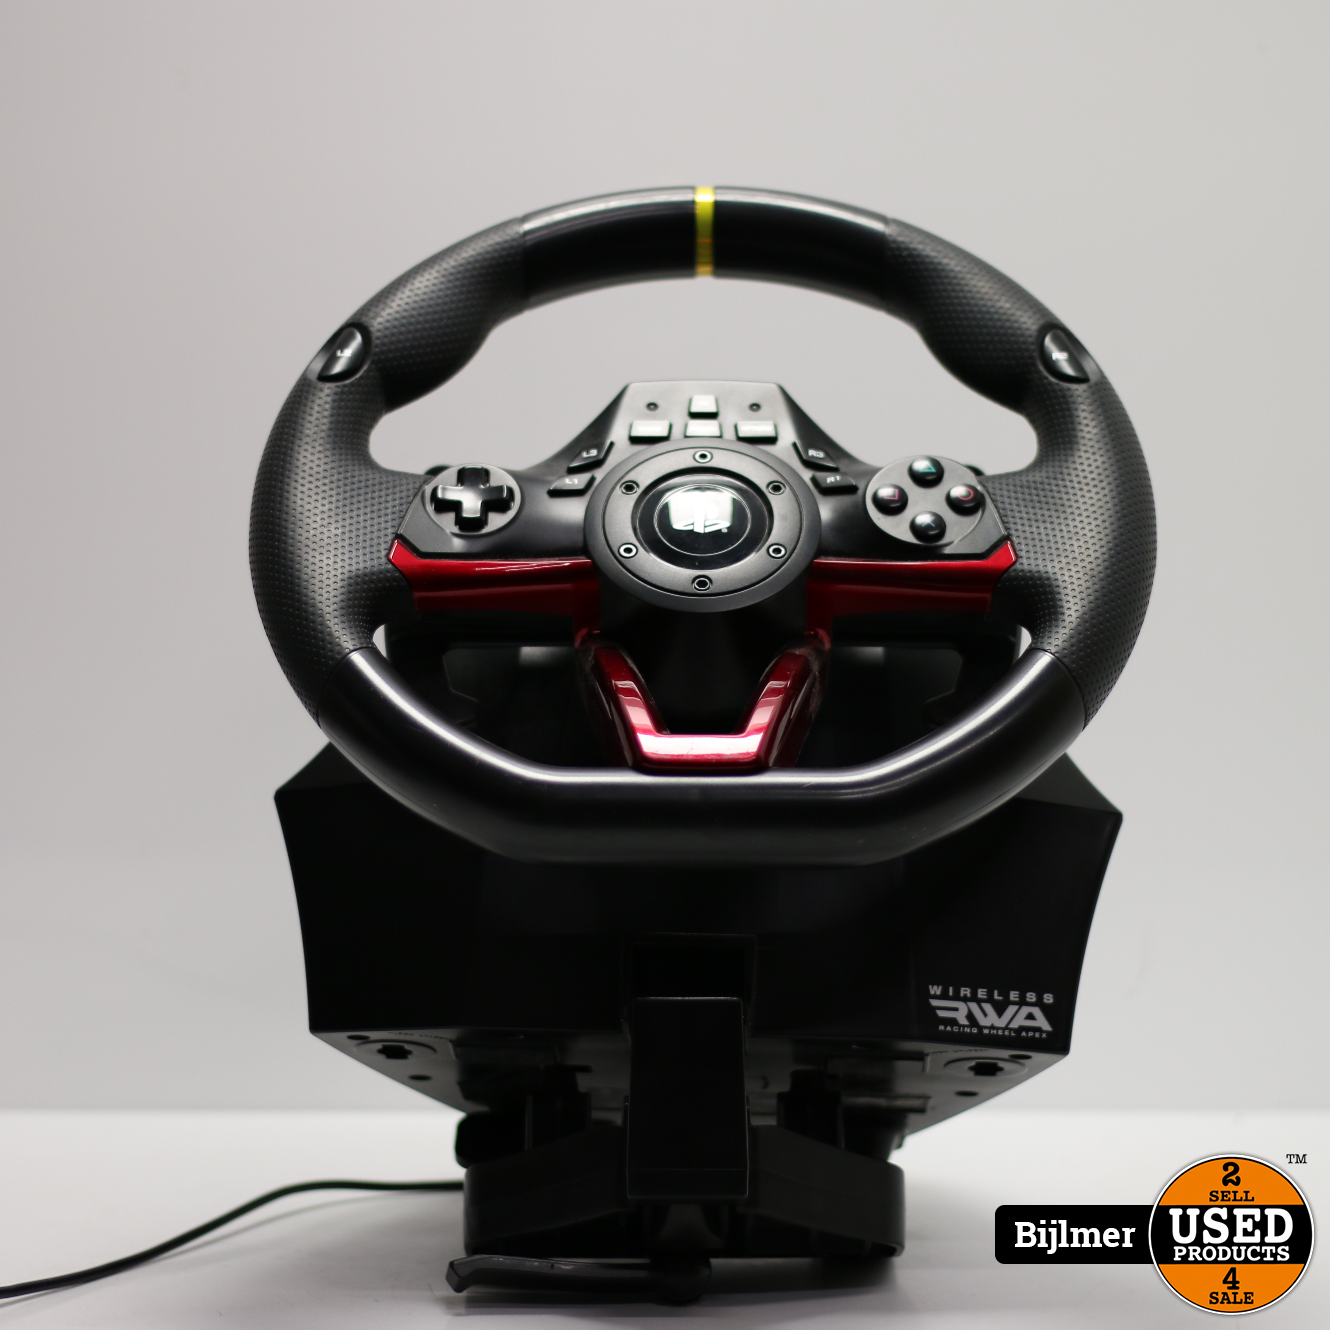 Hori Racing Wheel Stuur voor PS5/PS4/PC - Used Products Amsterdam Bijlmer